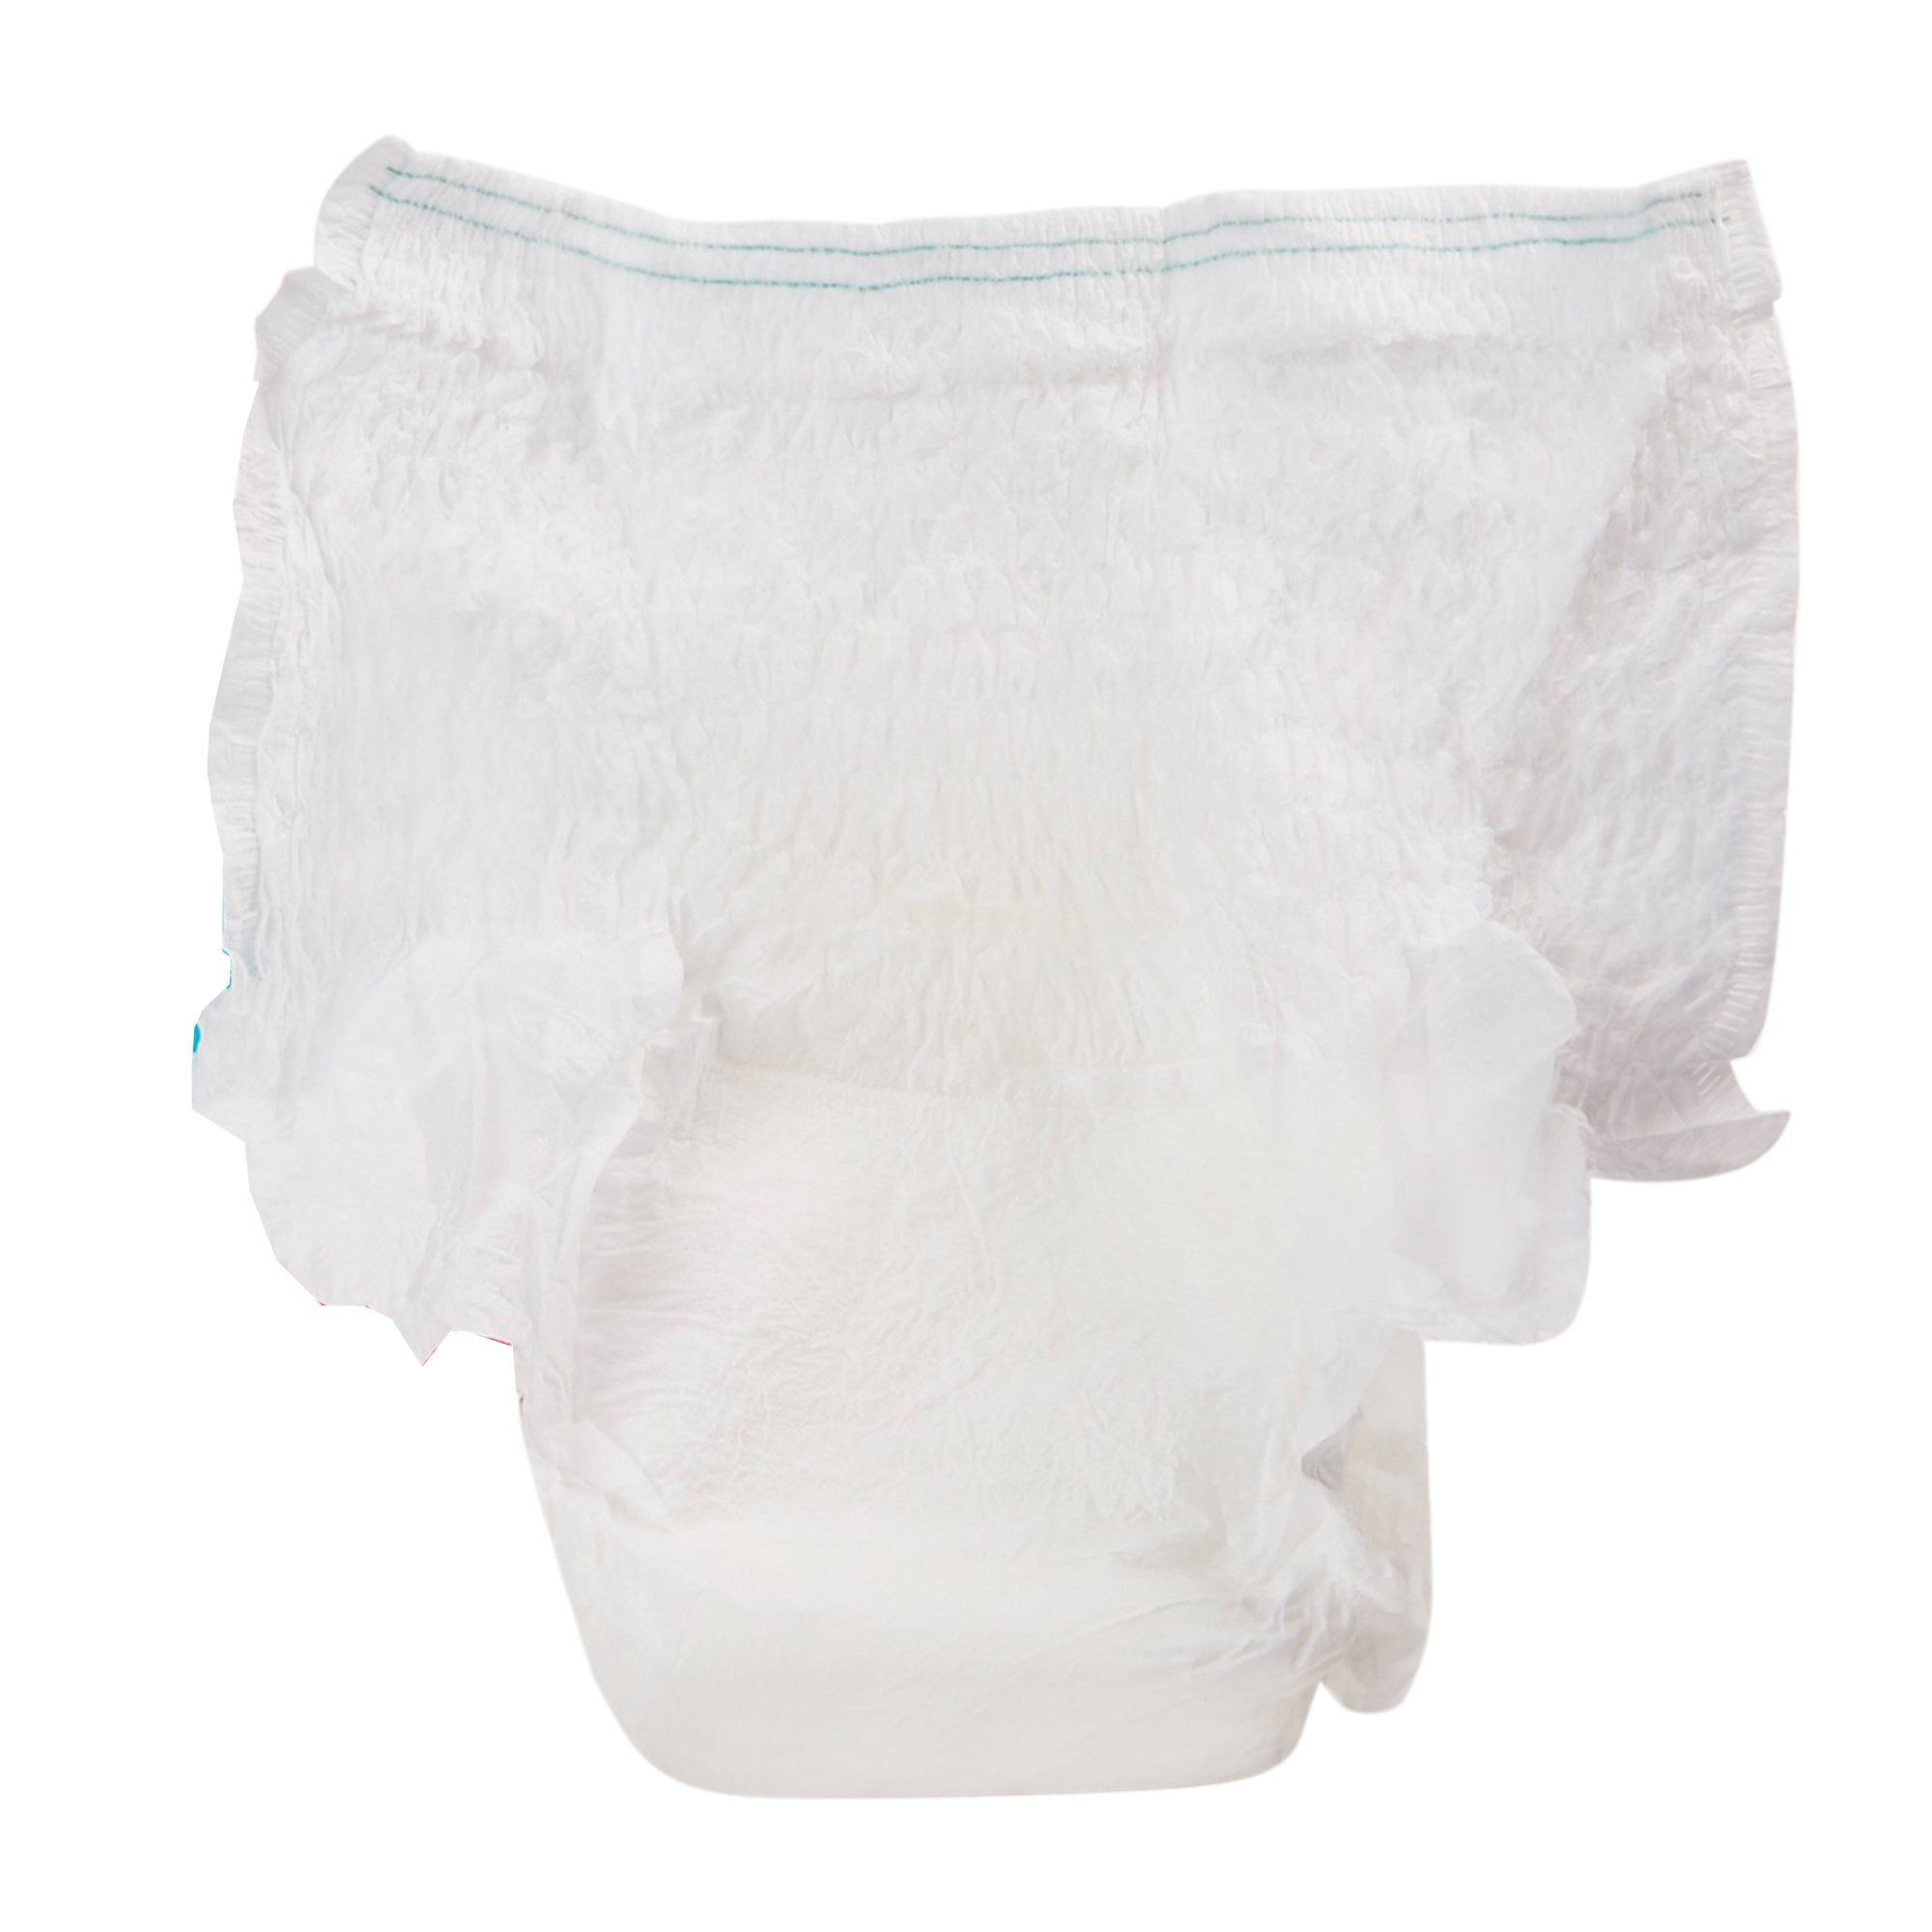 Attends Premier Overnight Incontinence Underwear - Premium Unisex Adult  Undergarment - Simply Medical